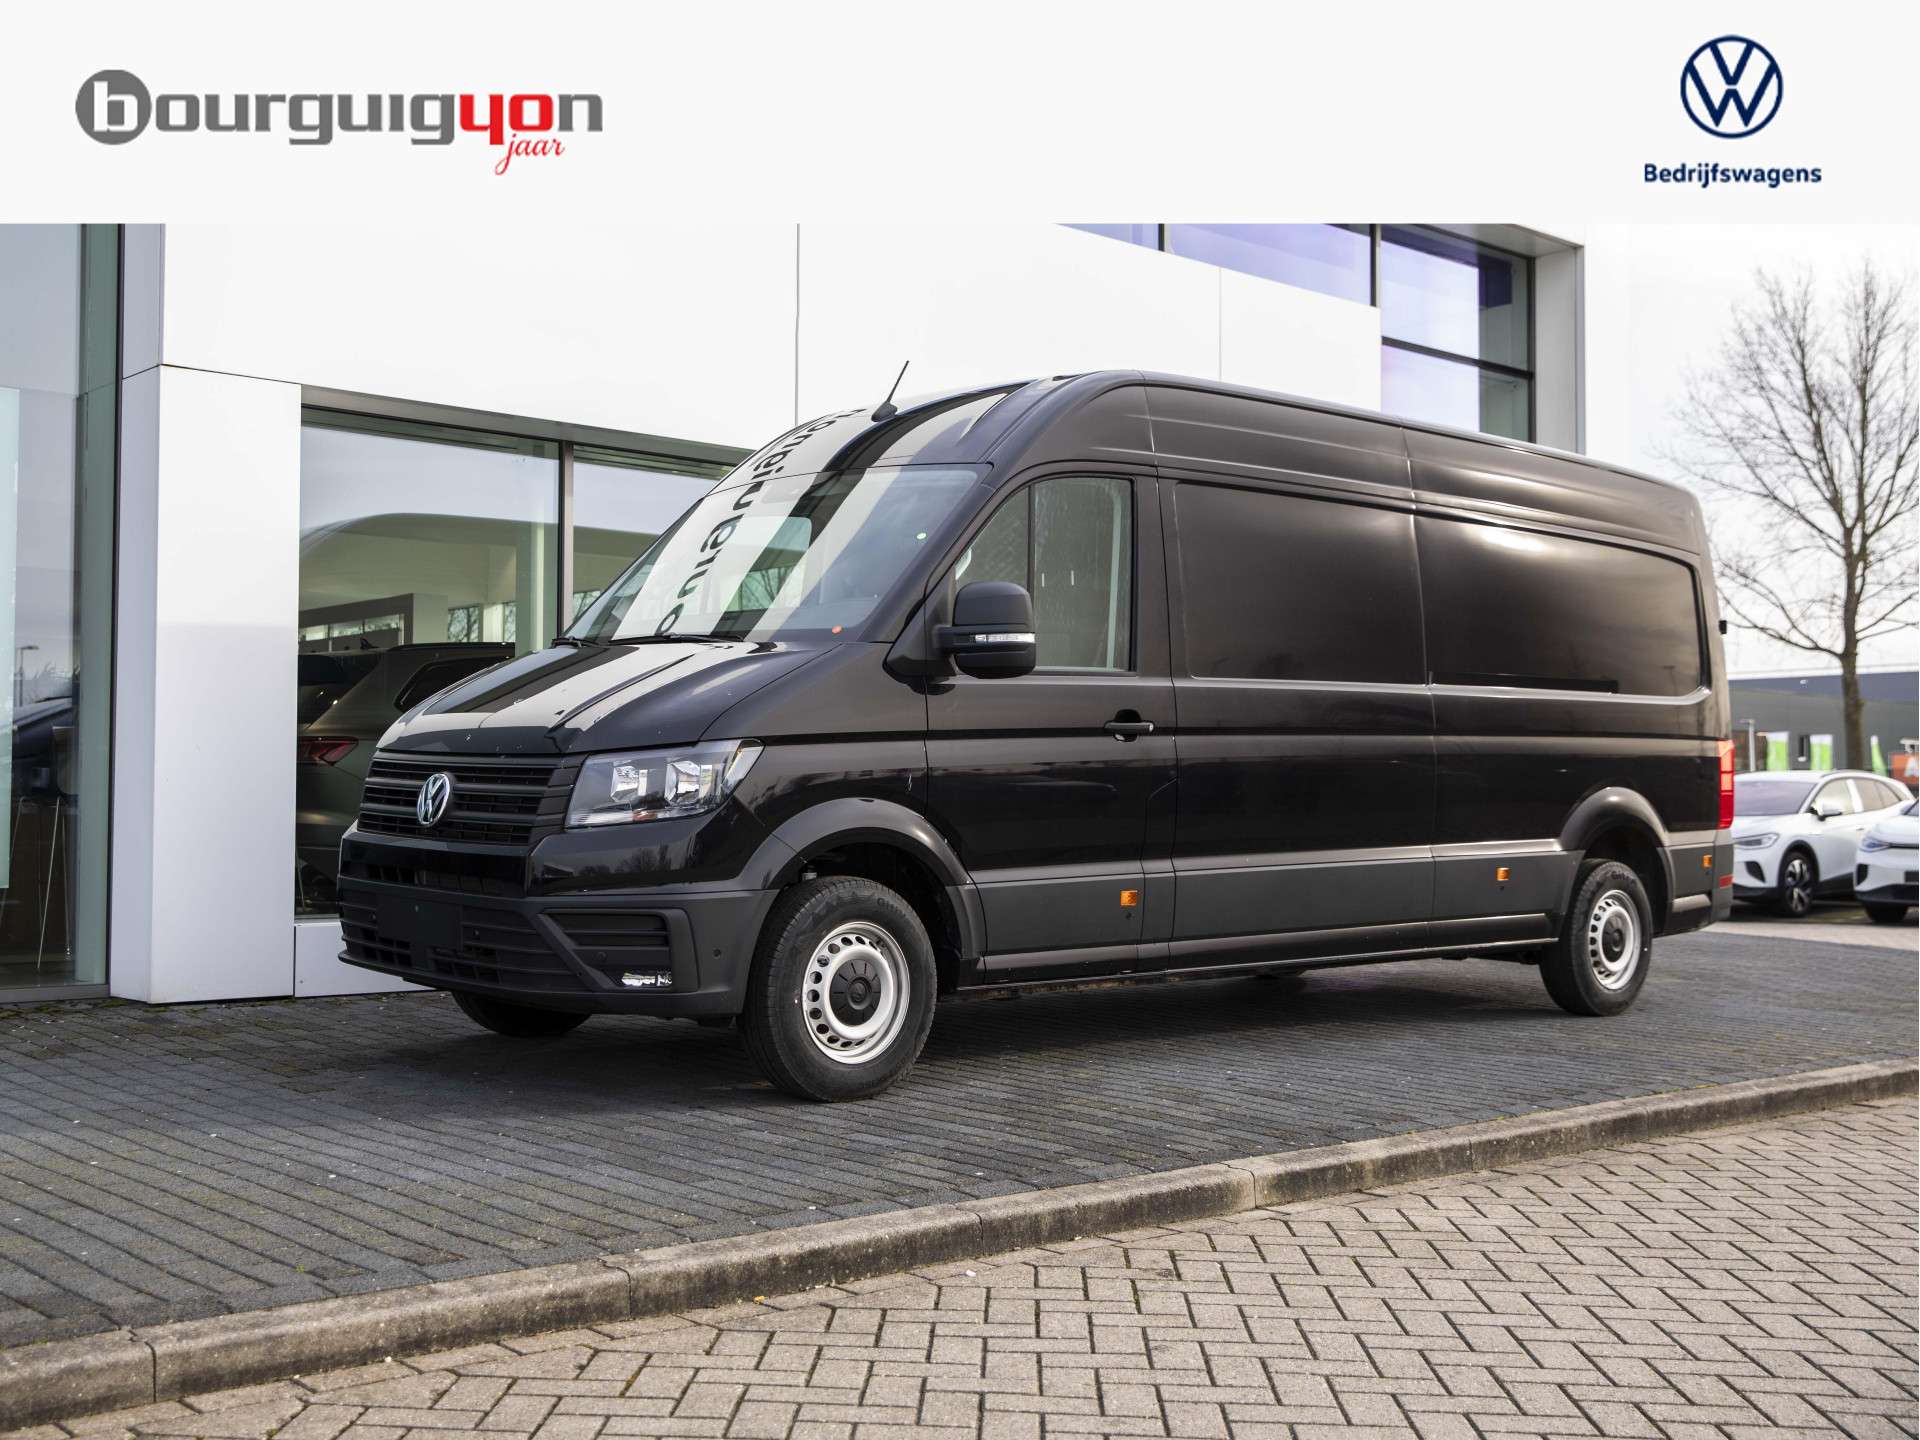 Volkswagen Crafter Transporter in Black new in LEEUWARDEN for € 54,995.-